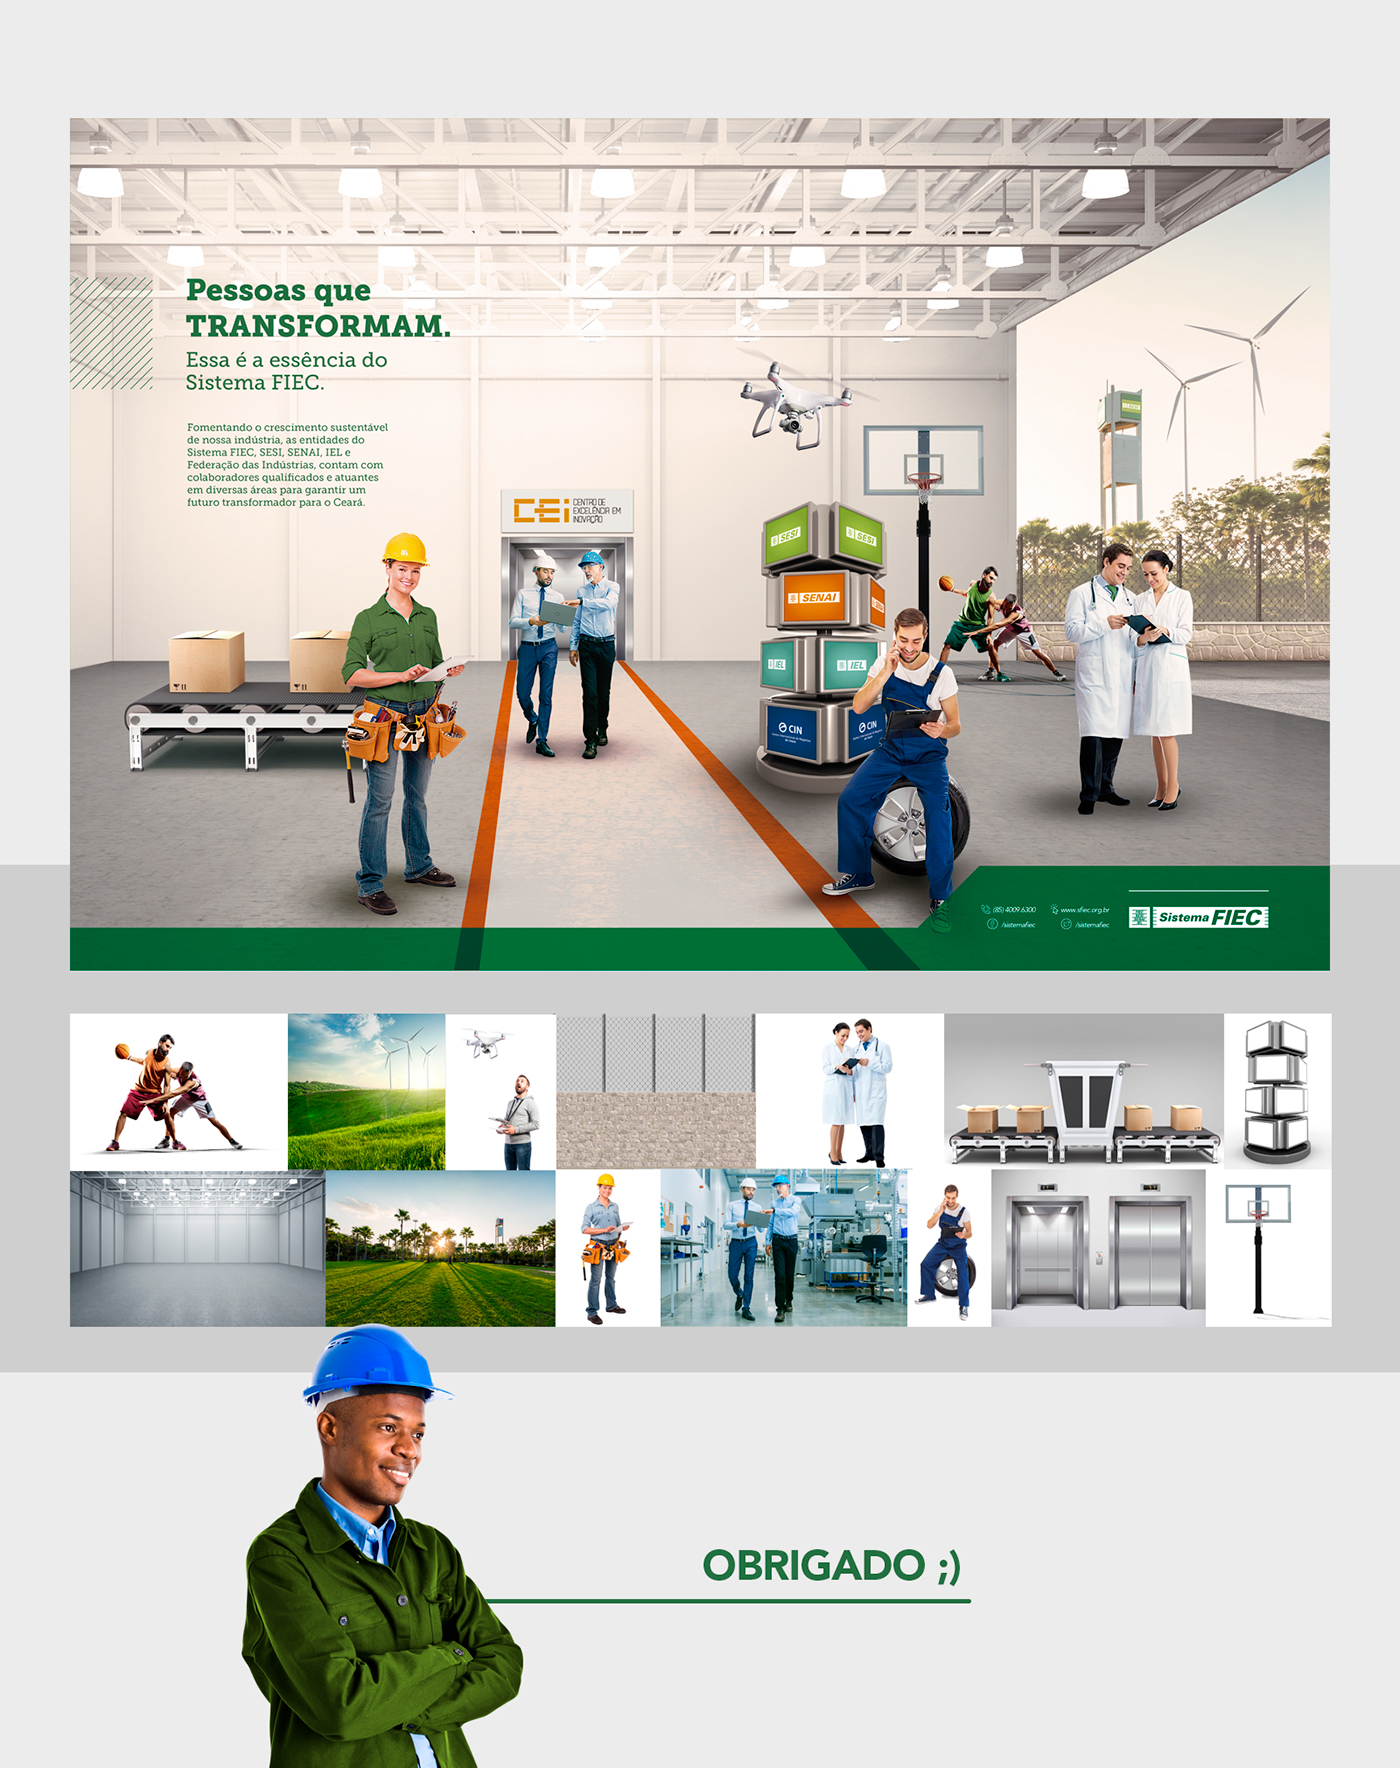 graphic design  Advertising  ads publicidade anúncio industria Senai SESI fiec Sistema FIEC